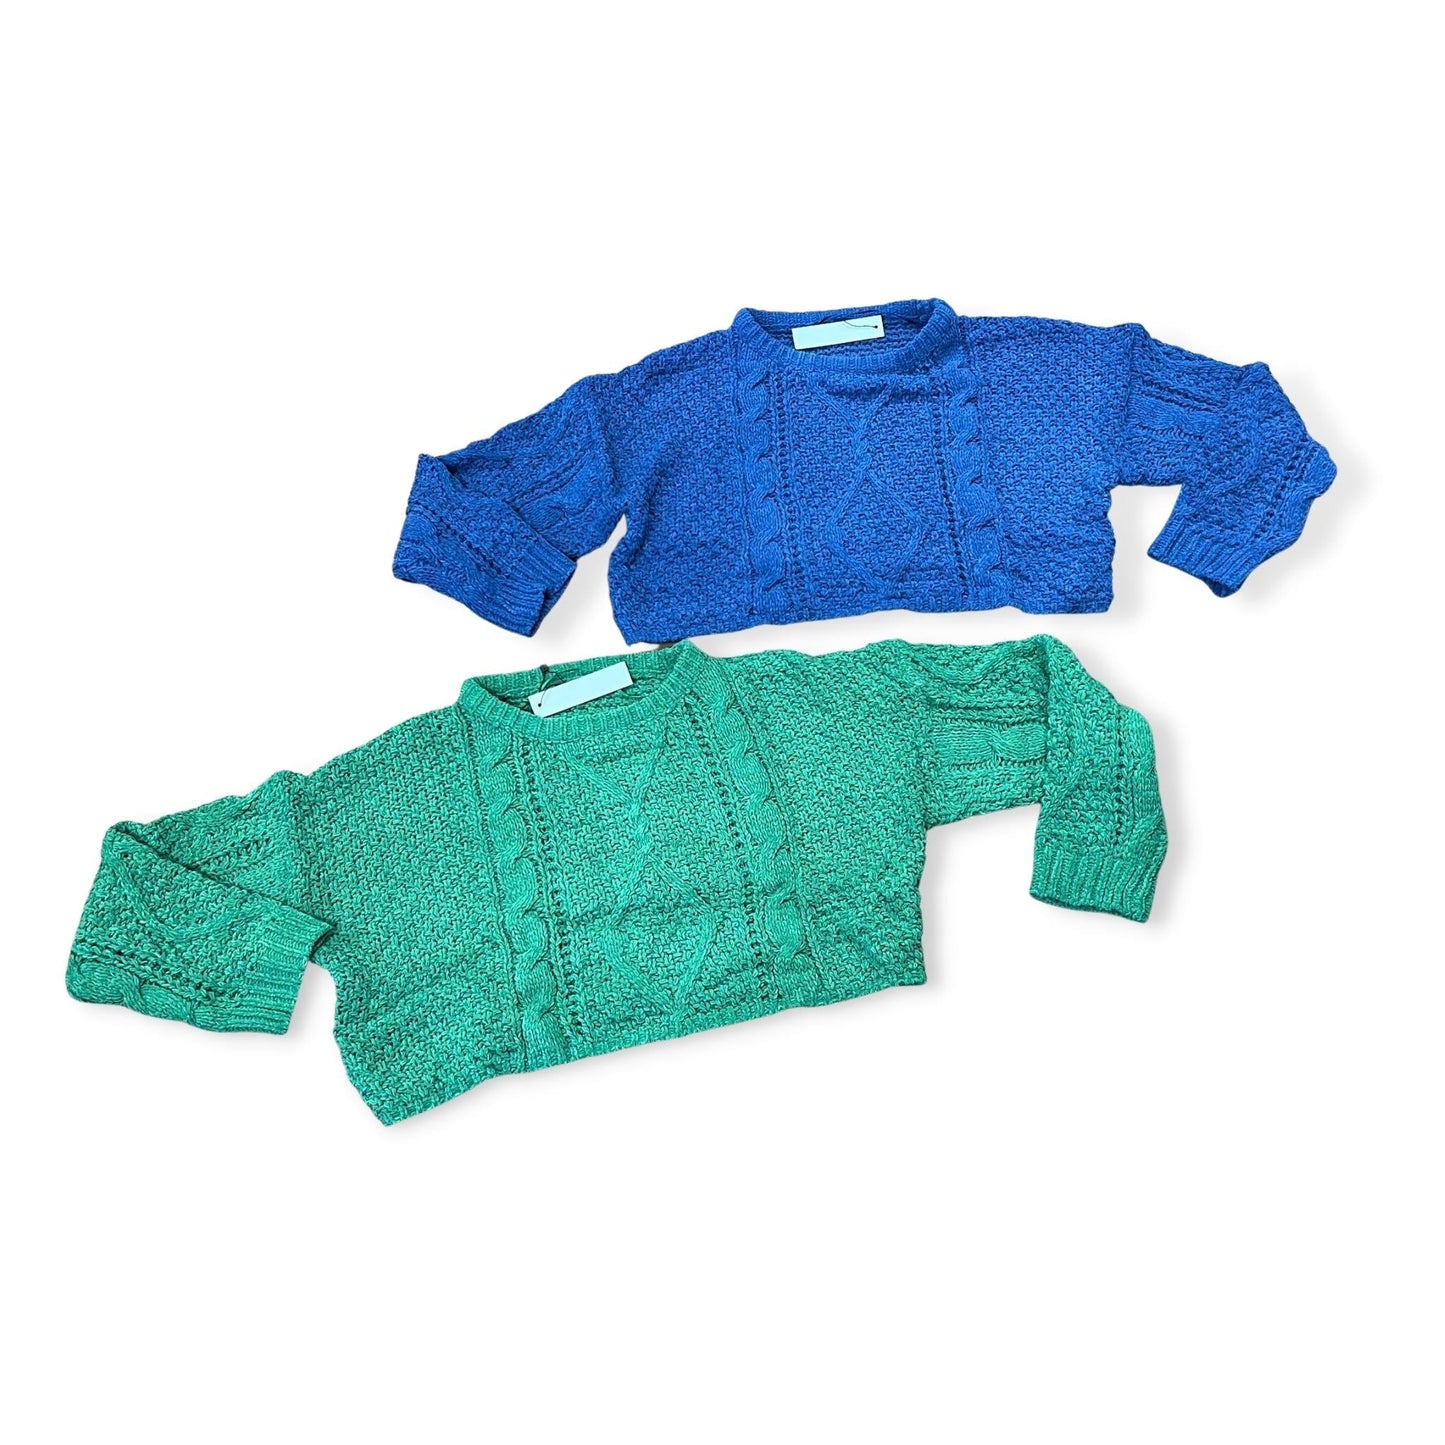 Papermoon Green Cora Cable Knit Pullover - a Spirit Animal - Pullover $30-$60 active Nov 2022 Color-Green